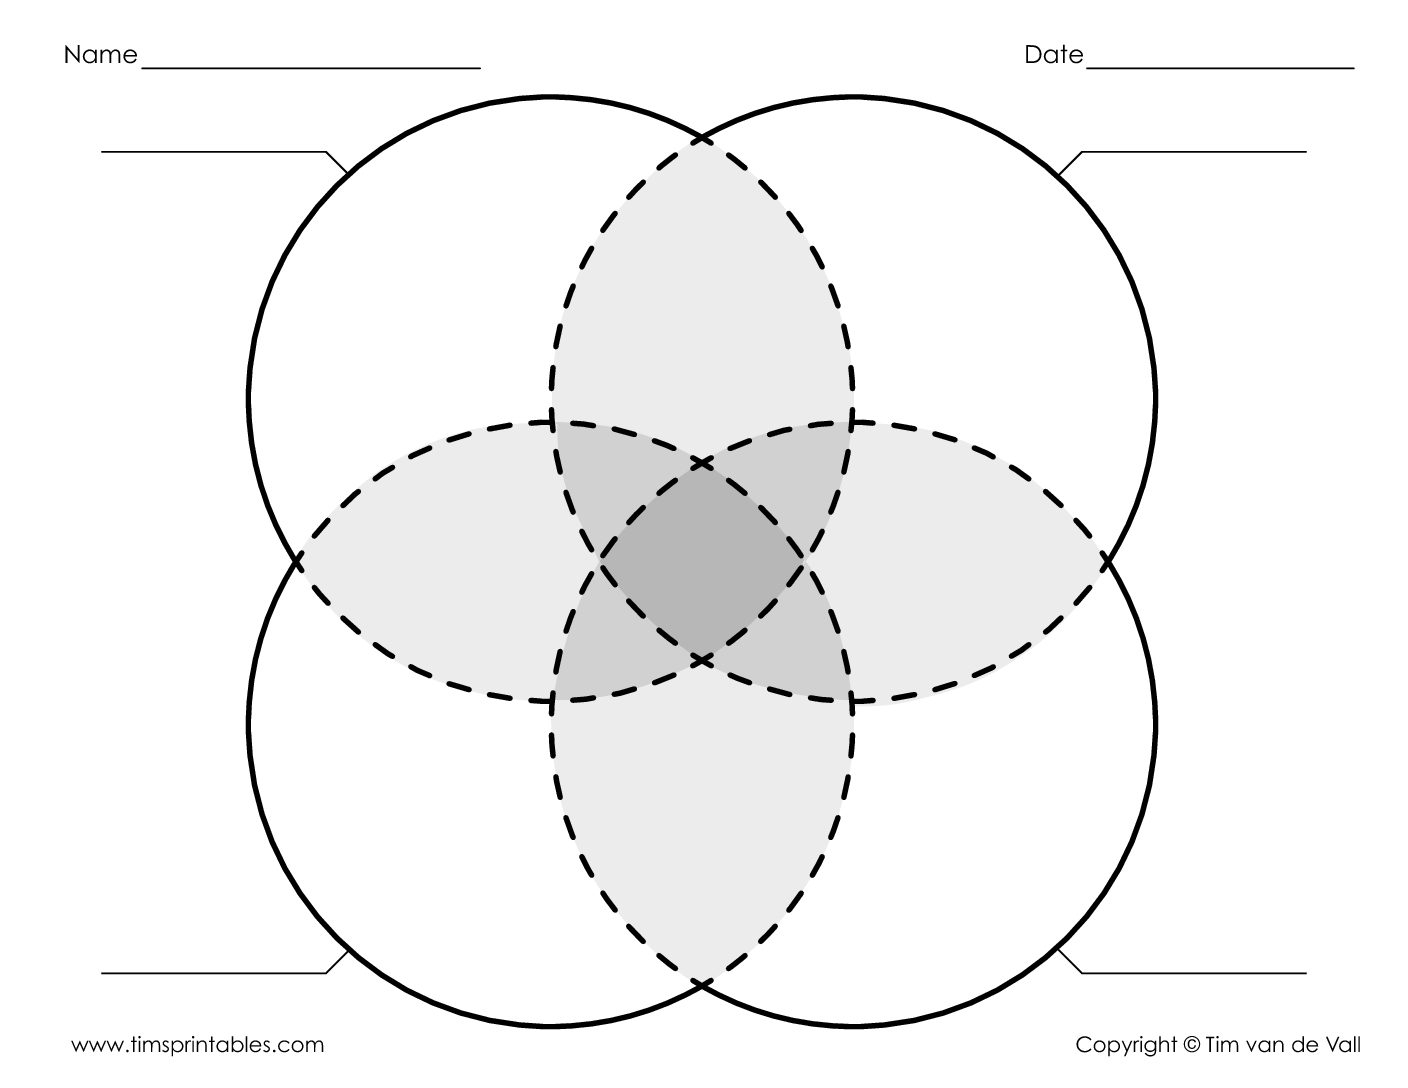 Blank Venn Diagram Blank Venn Diagram 4 Circles Search Wiring Diagrams